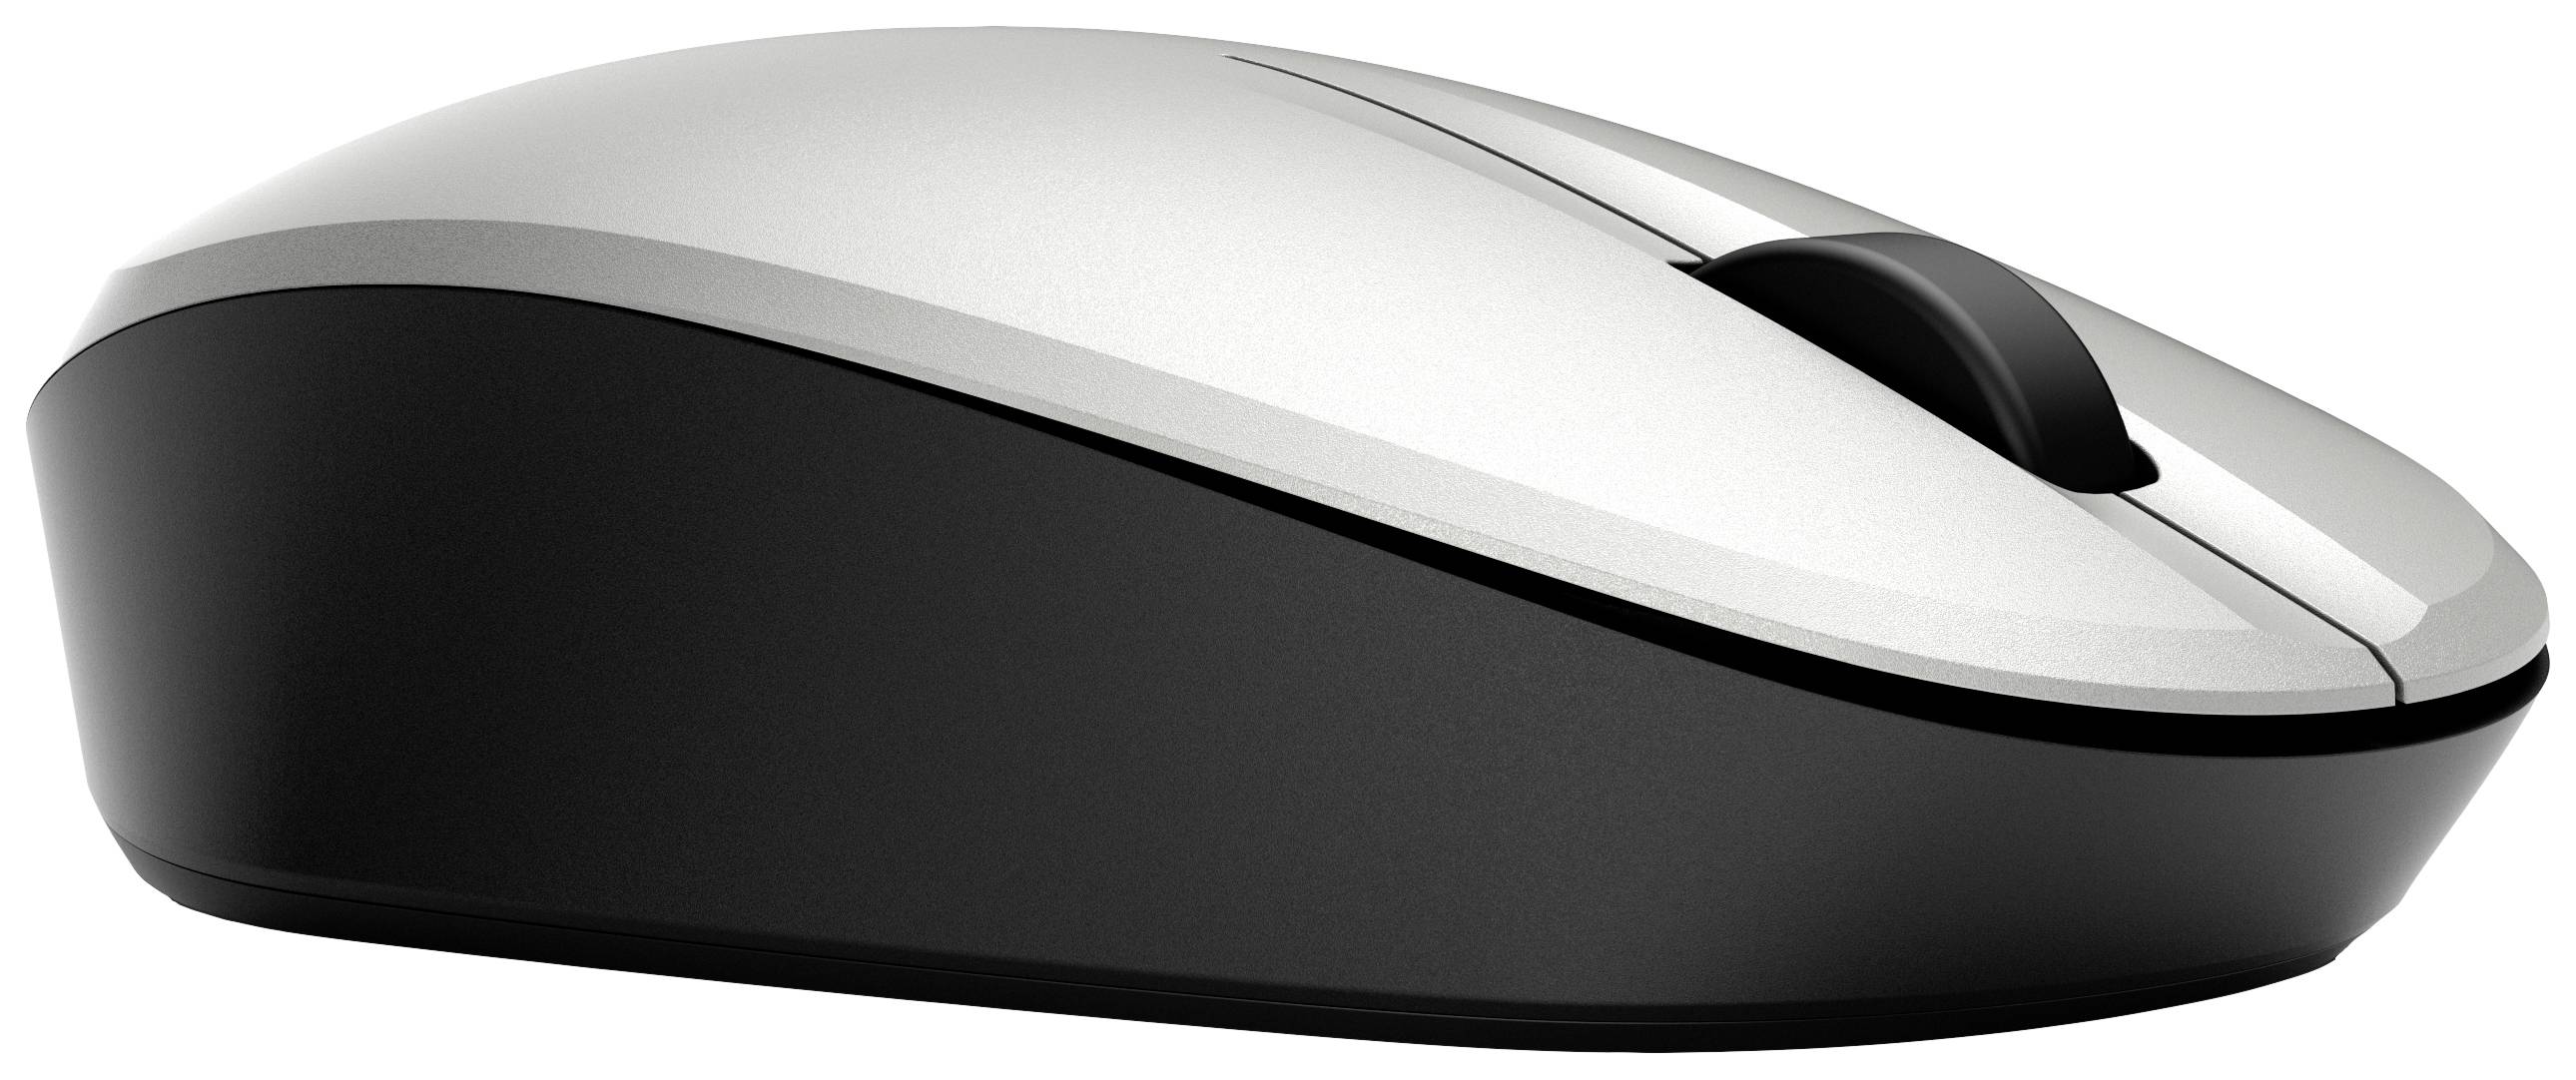 HP Dual Mode Silver Mouse 300 Euro (P)